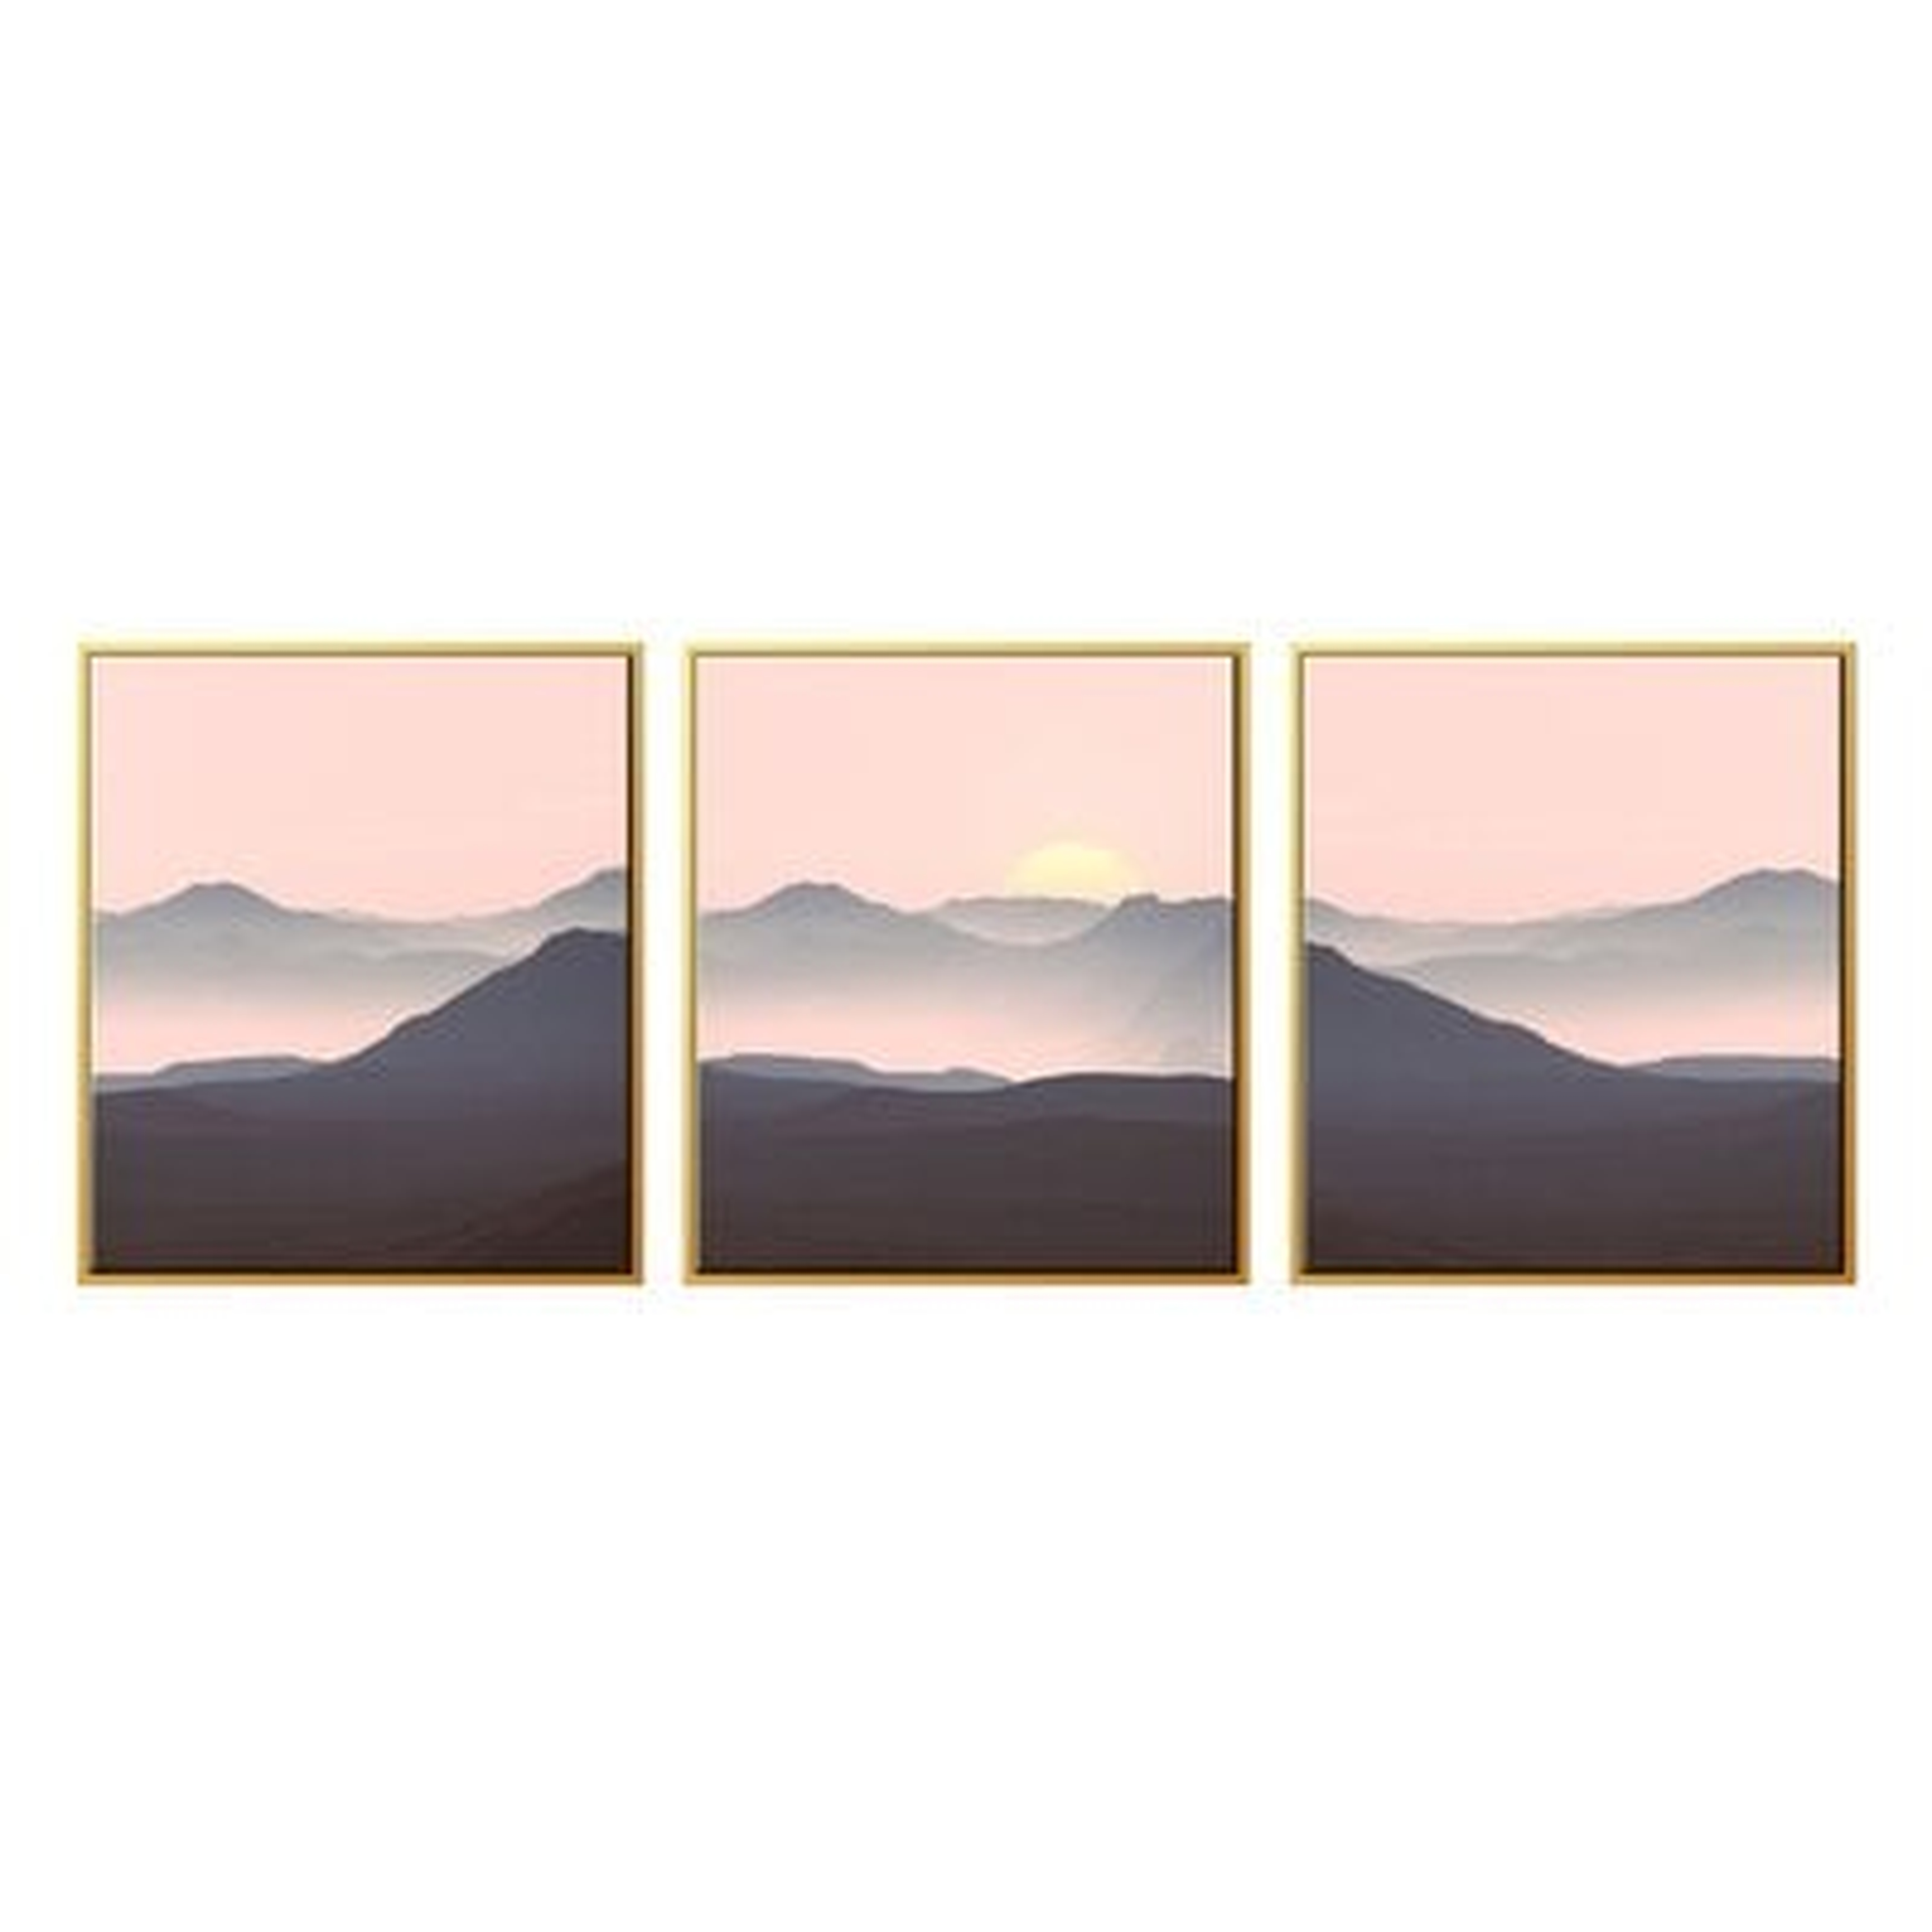 'Navy Pink Sunset' Graphic Art Multi-Piece Image on Canvas - AllModern